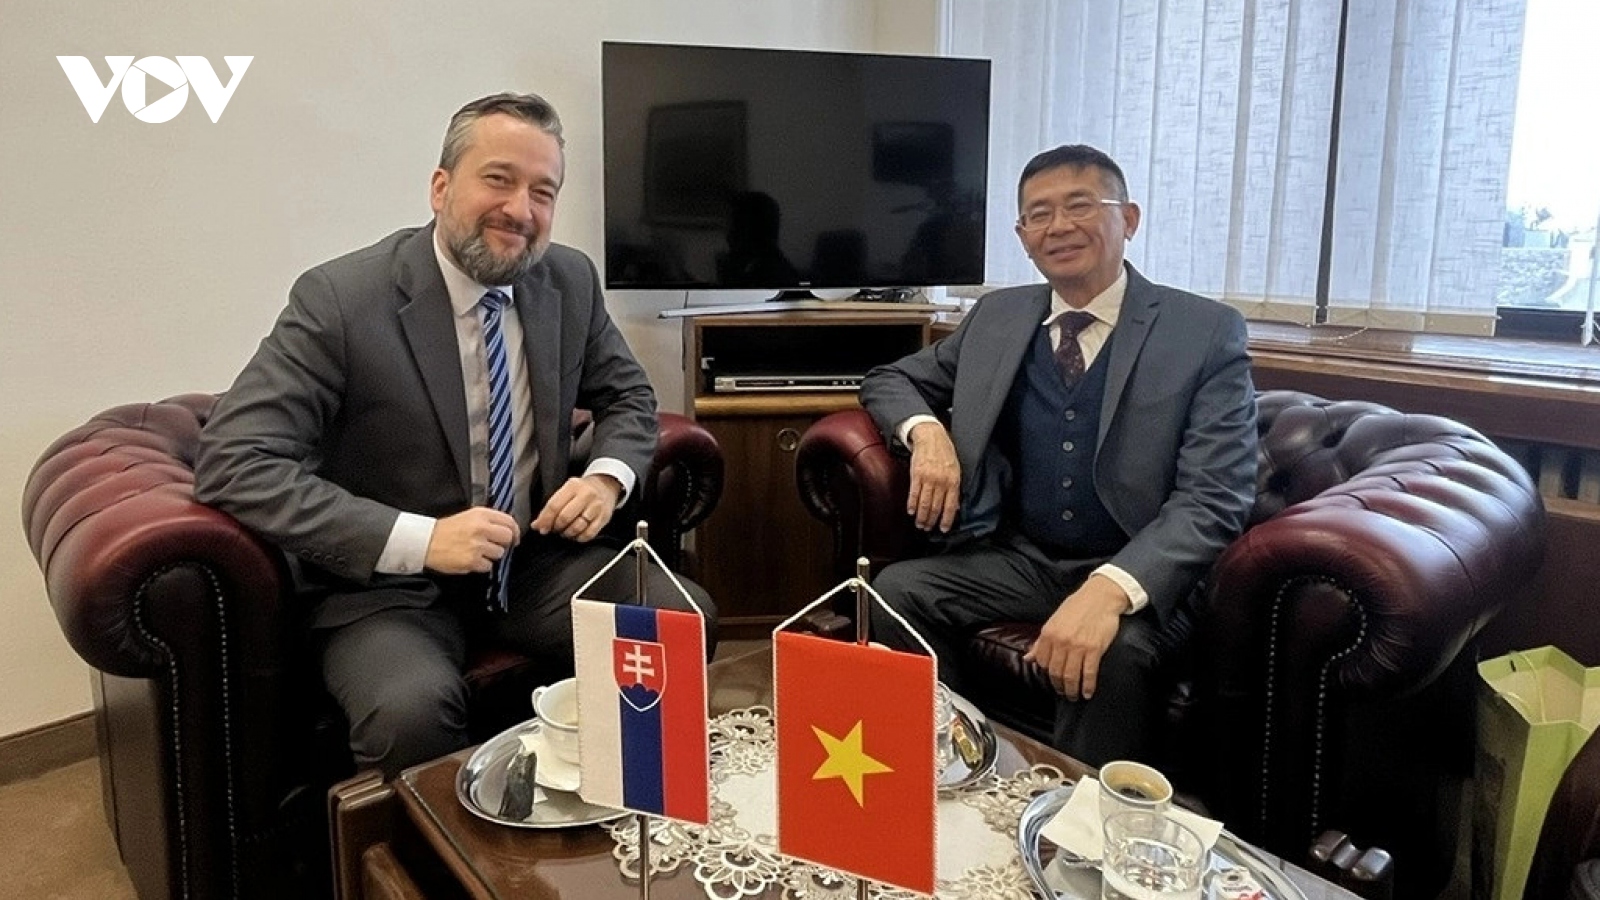 Vietnam is Slovakia’s important partner, says Slovak official